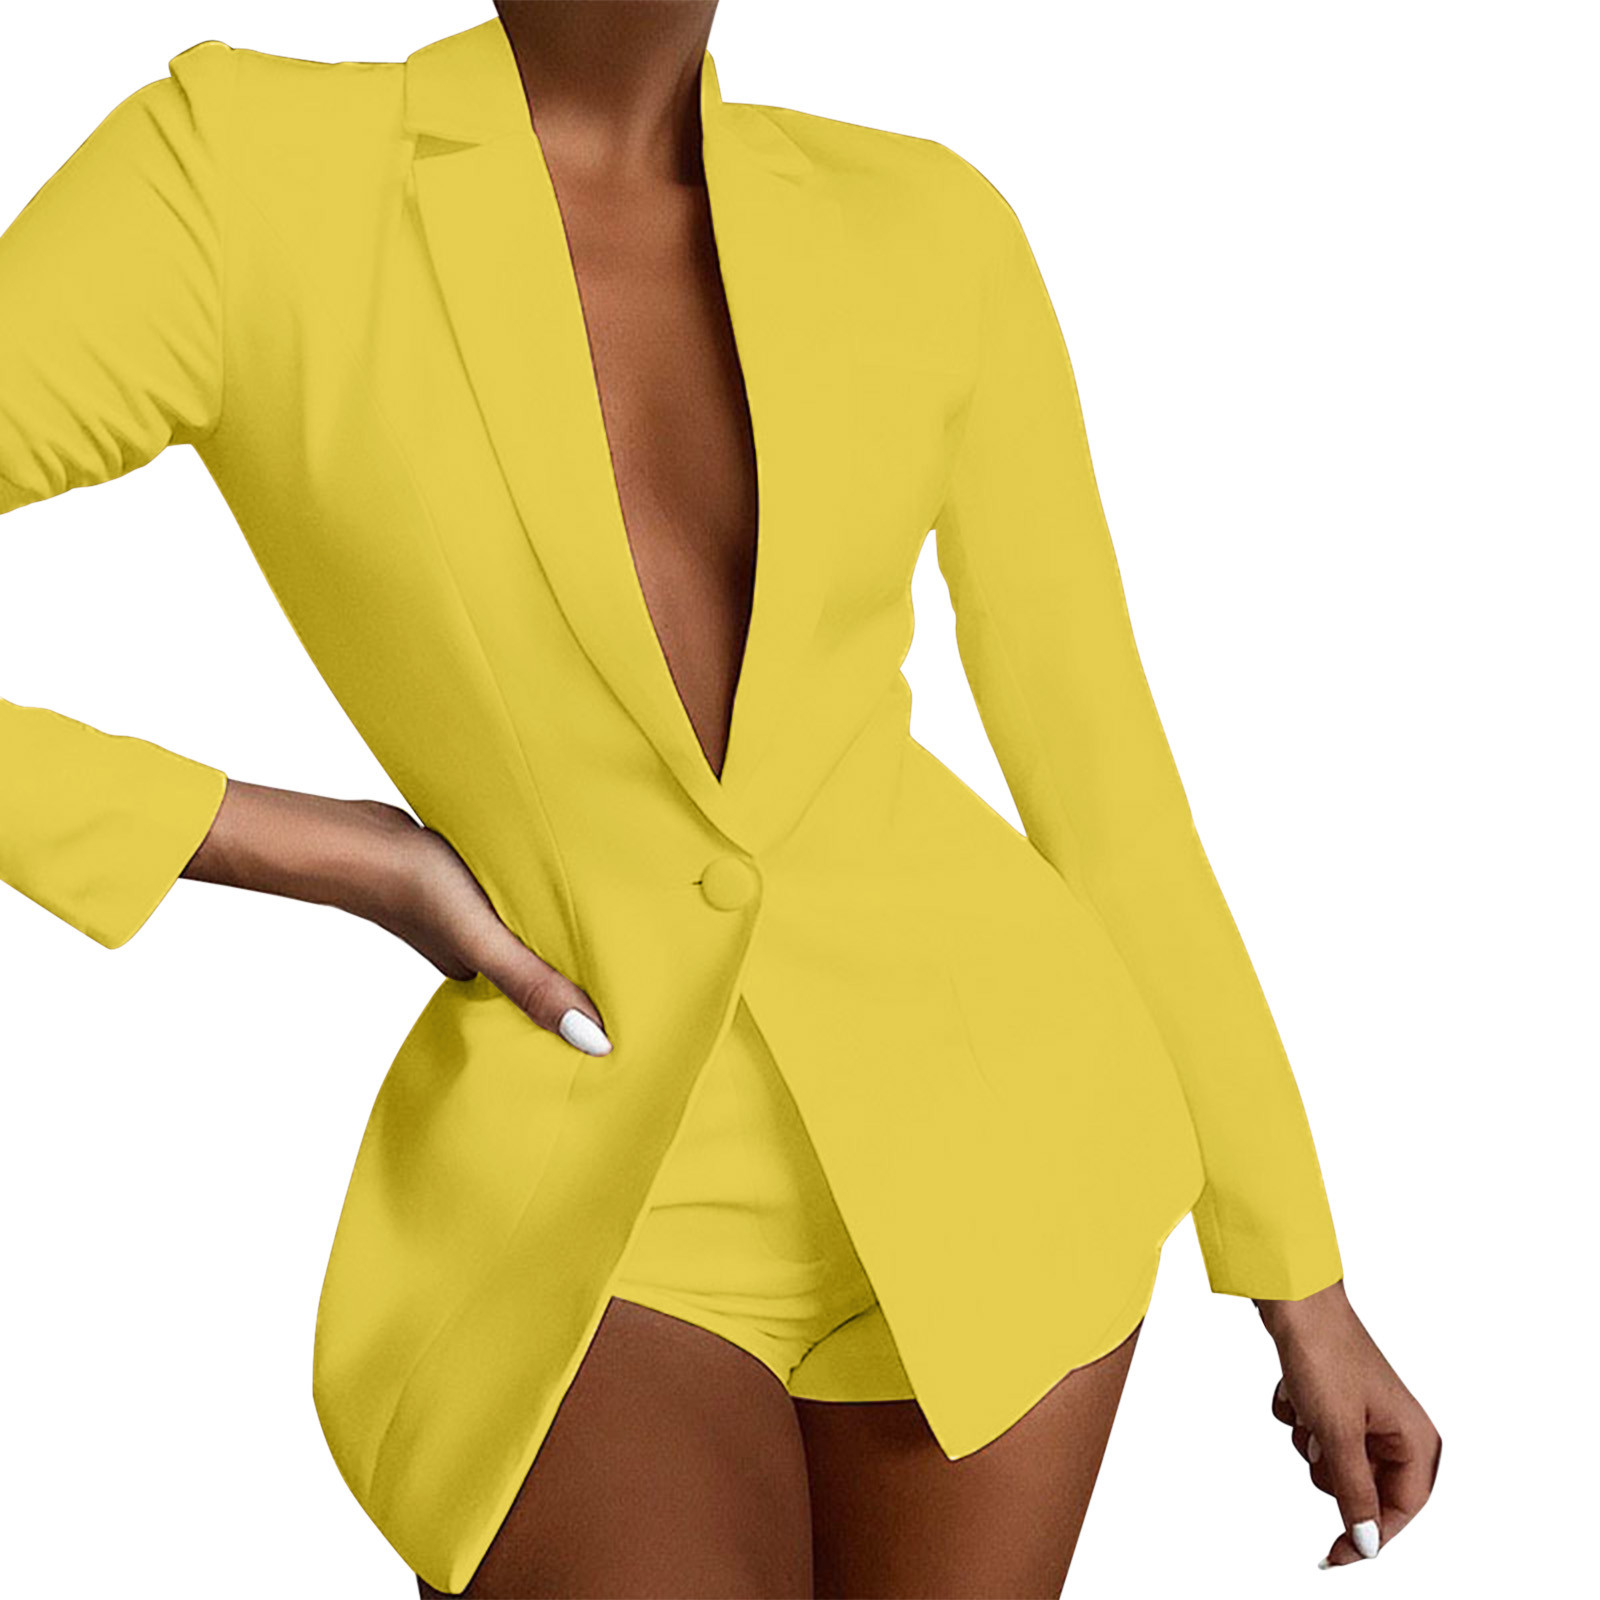 iOPQO blazer jackets for women Women's Casual Light Weight Thin Jacket Slim Coat Long Sleeve Blazer Office Business Coats Jacket Women's Blazers Yellow M - image 1 of 7